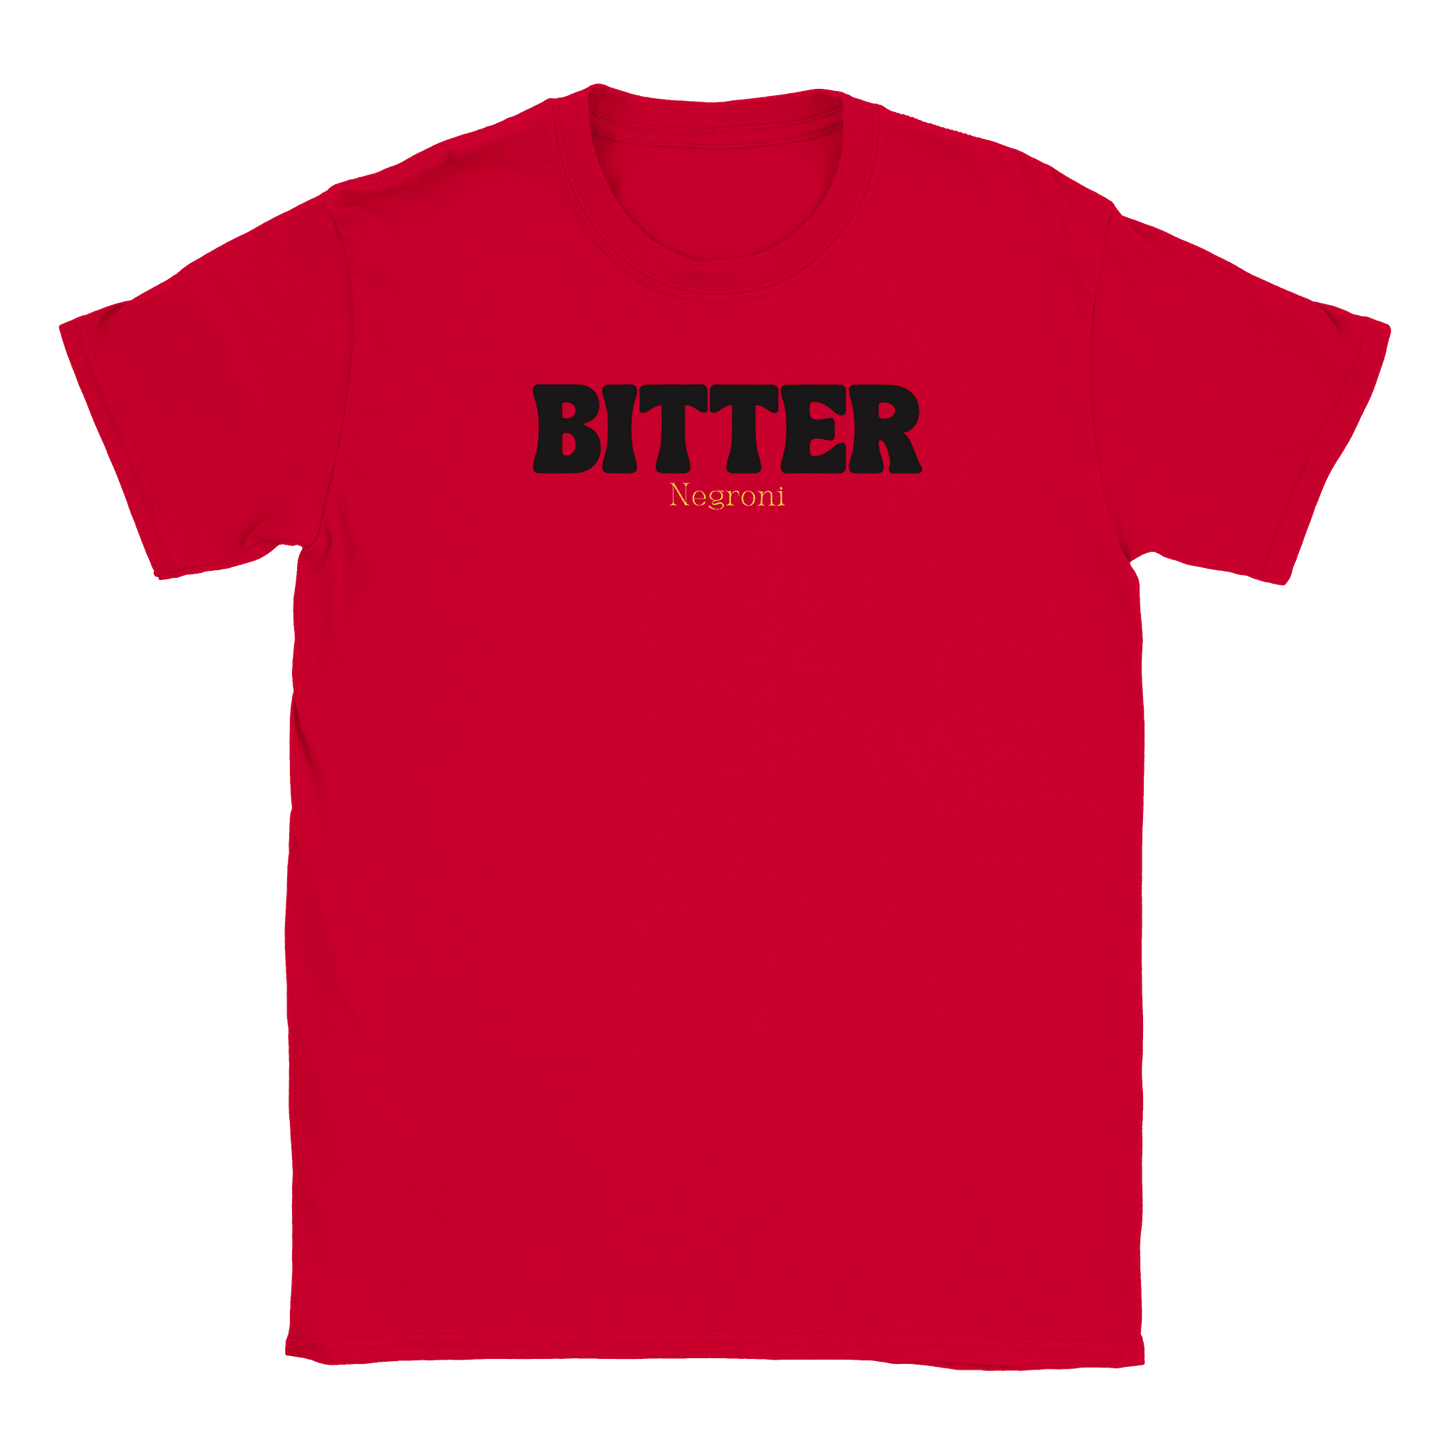 Bitter Negroni - T-shirt Röd